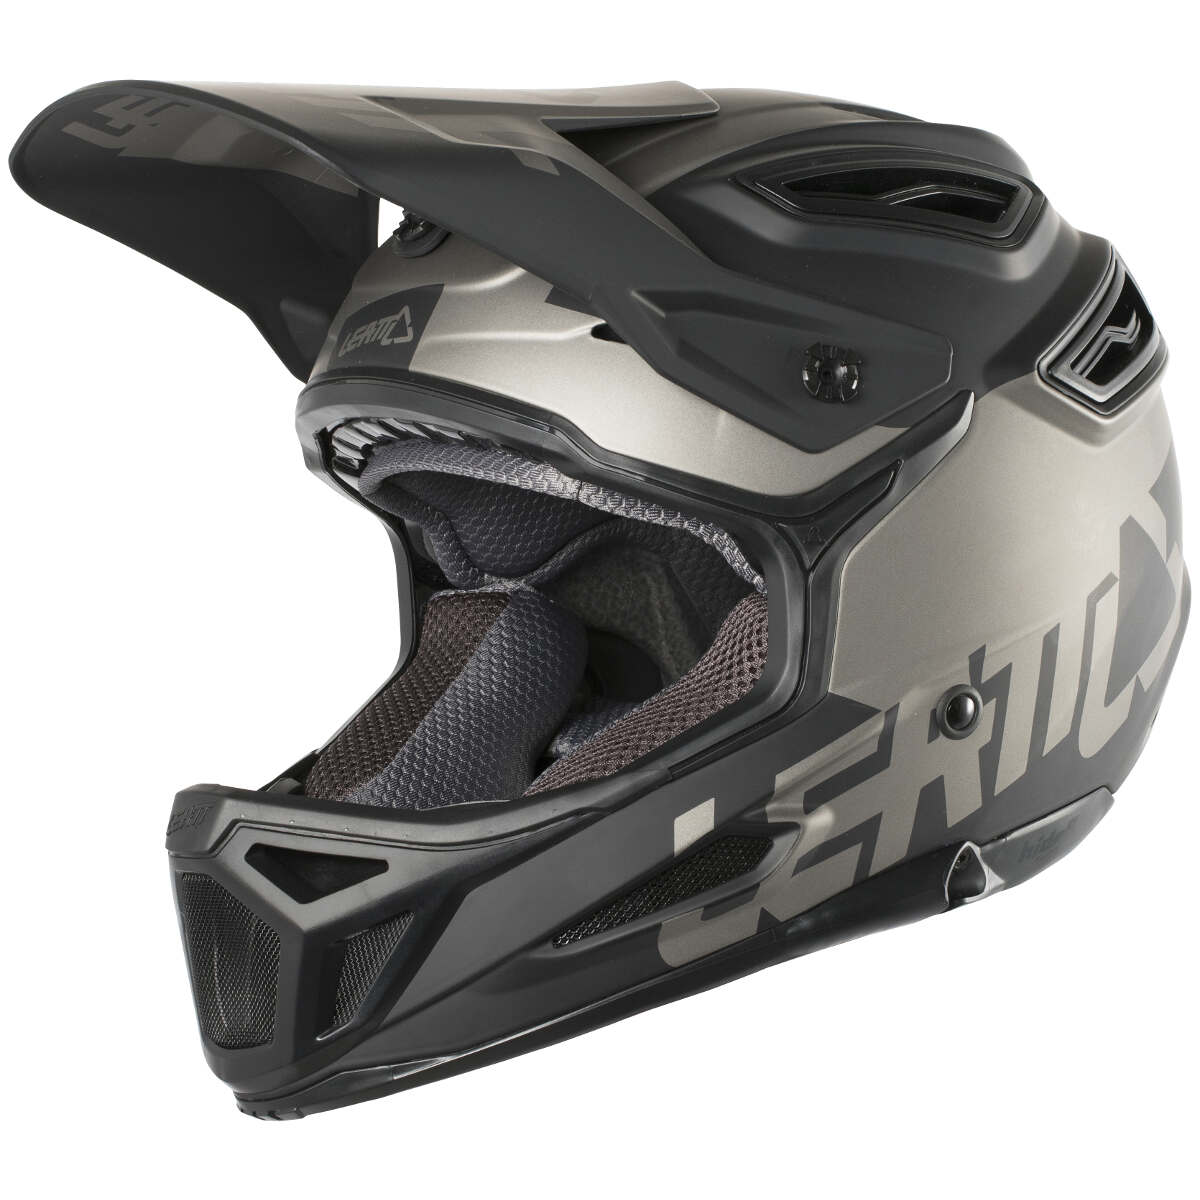 Leatt Downhill MTB Helmet DBX 5.0 Composite Black/Grey